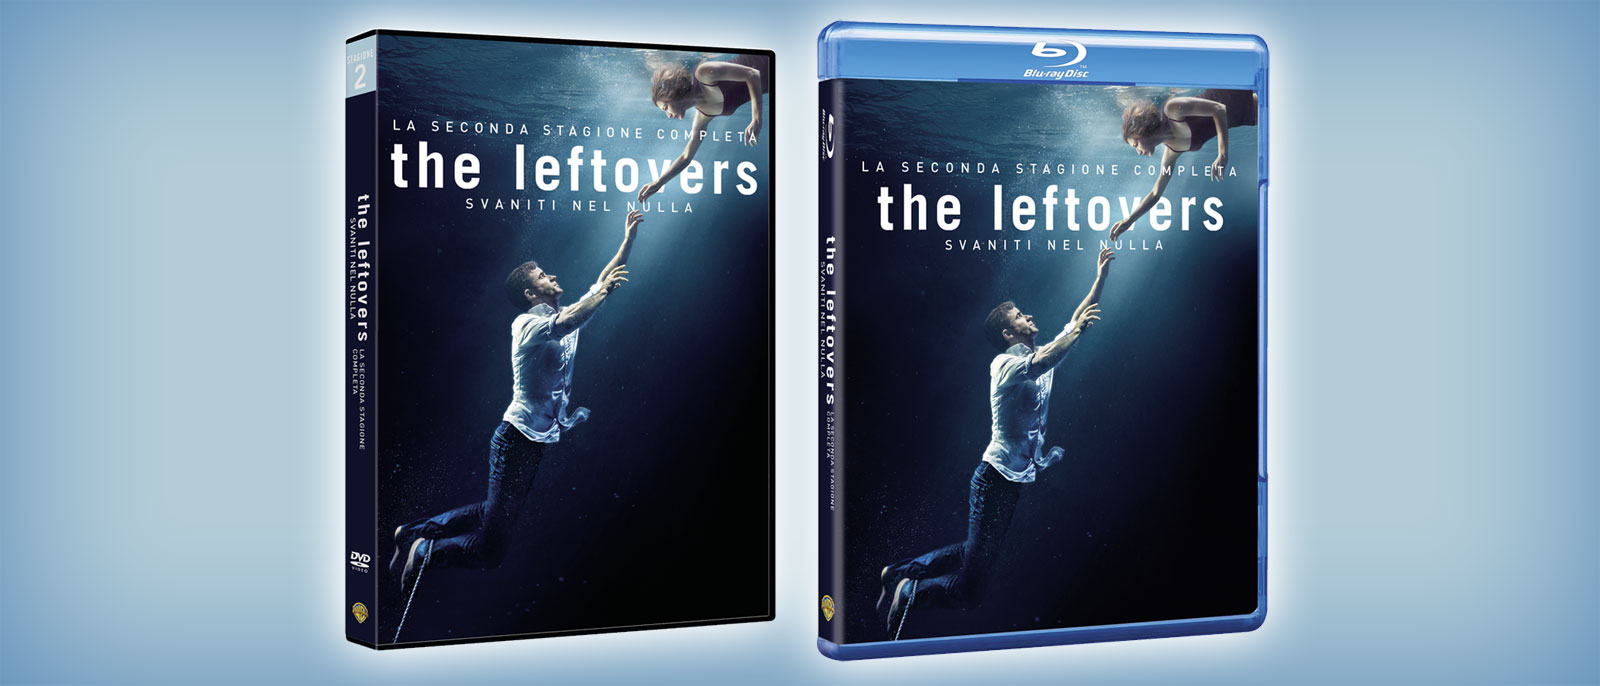 The Leftovers - Svaniti nel nulla, Stagione 2 in DVD, Blu-ray